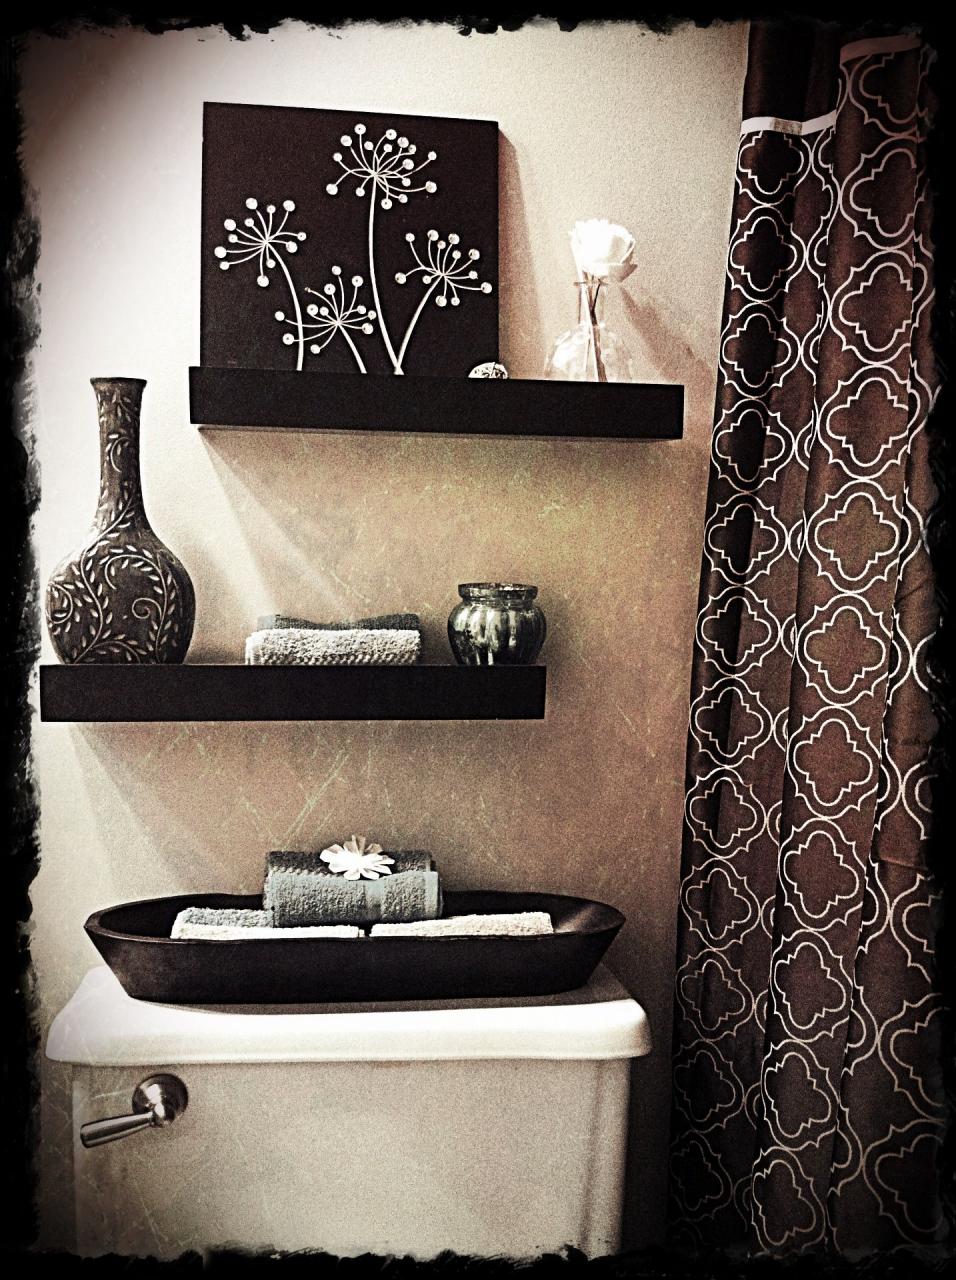 20 Practical And Decorative Bathroom Ideas